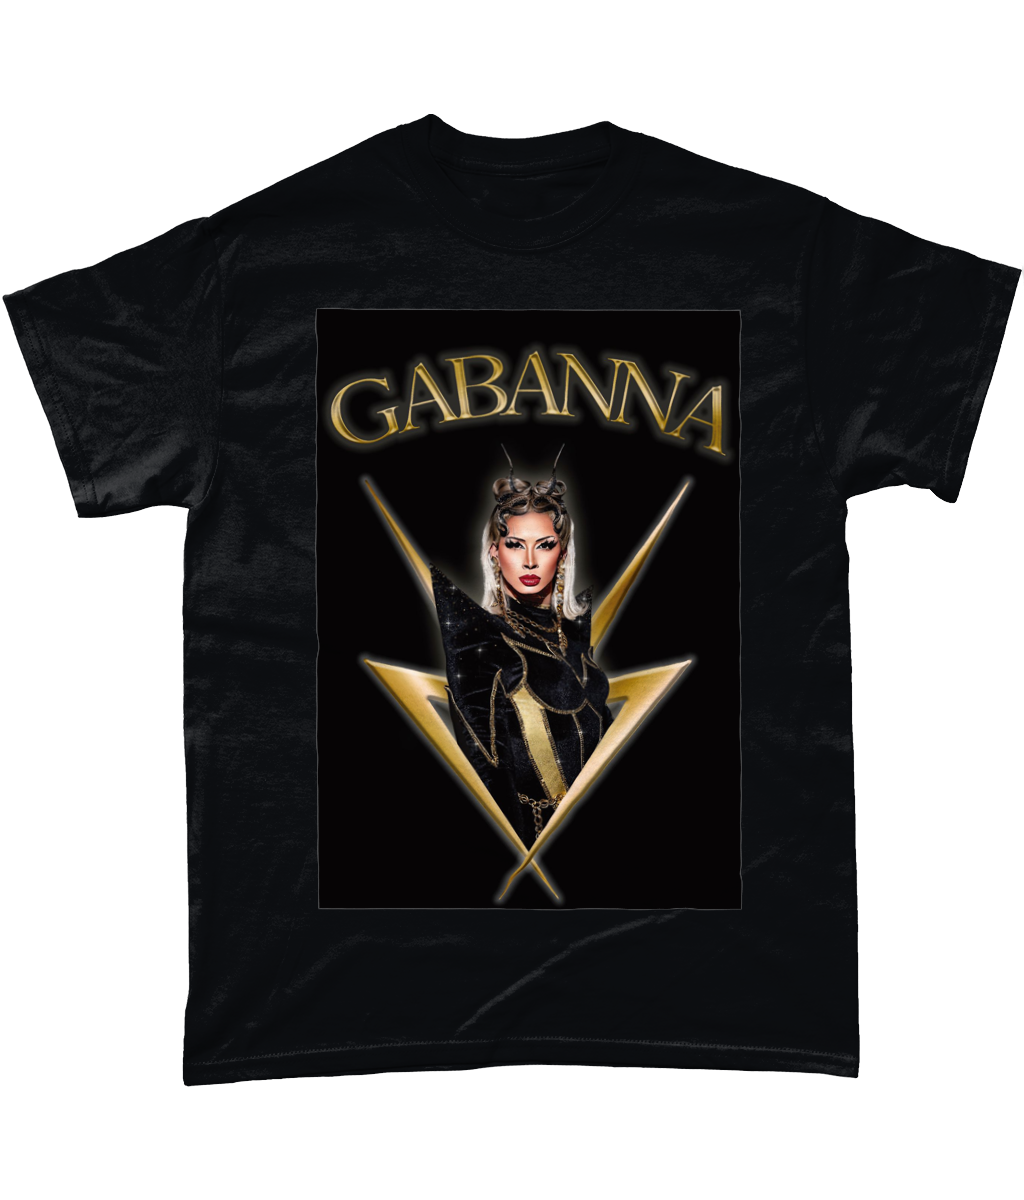 Gabanna - Black & Gold T-Shirt